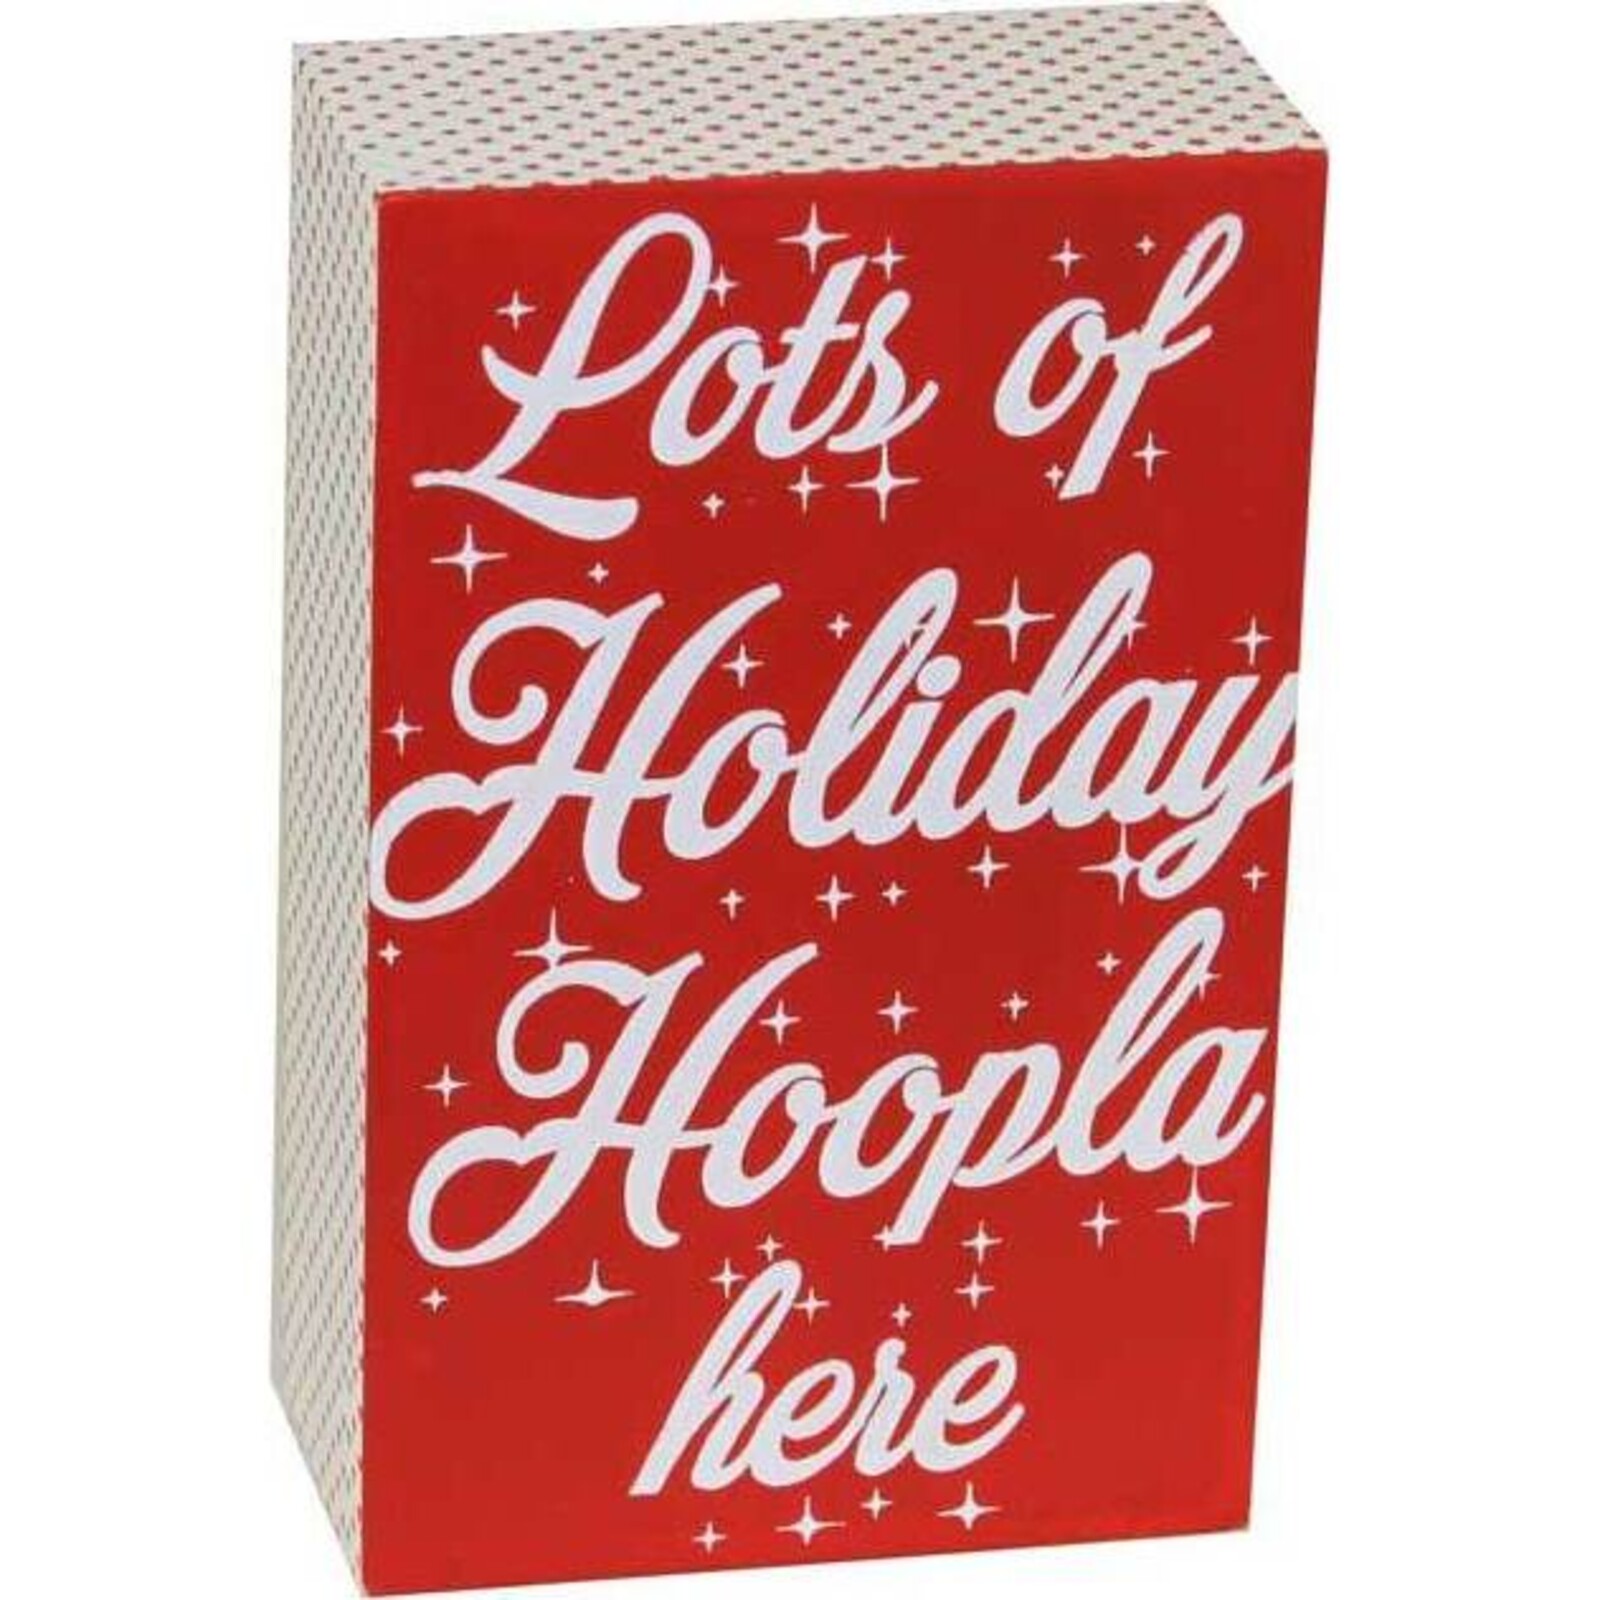 Sign Holiday hoopla